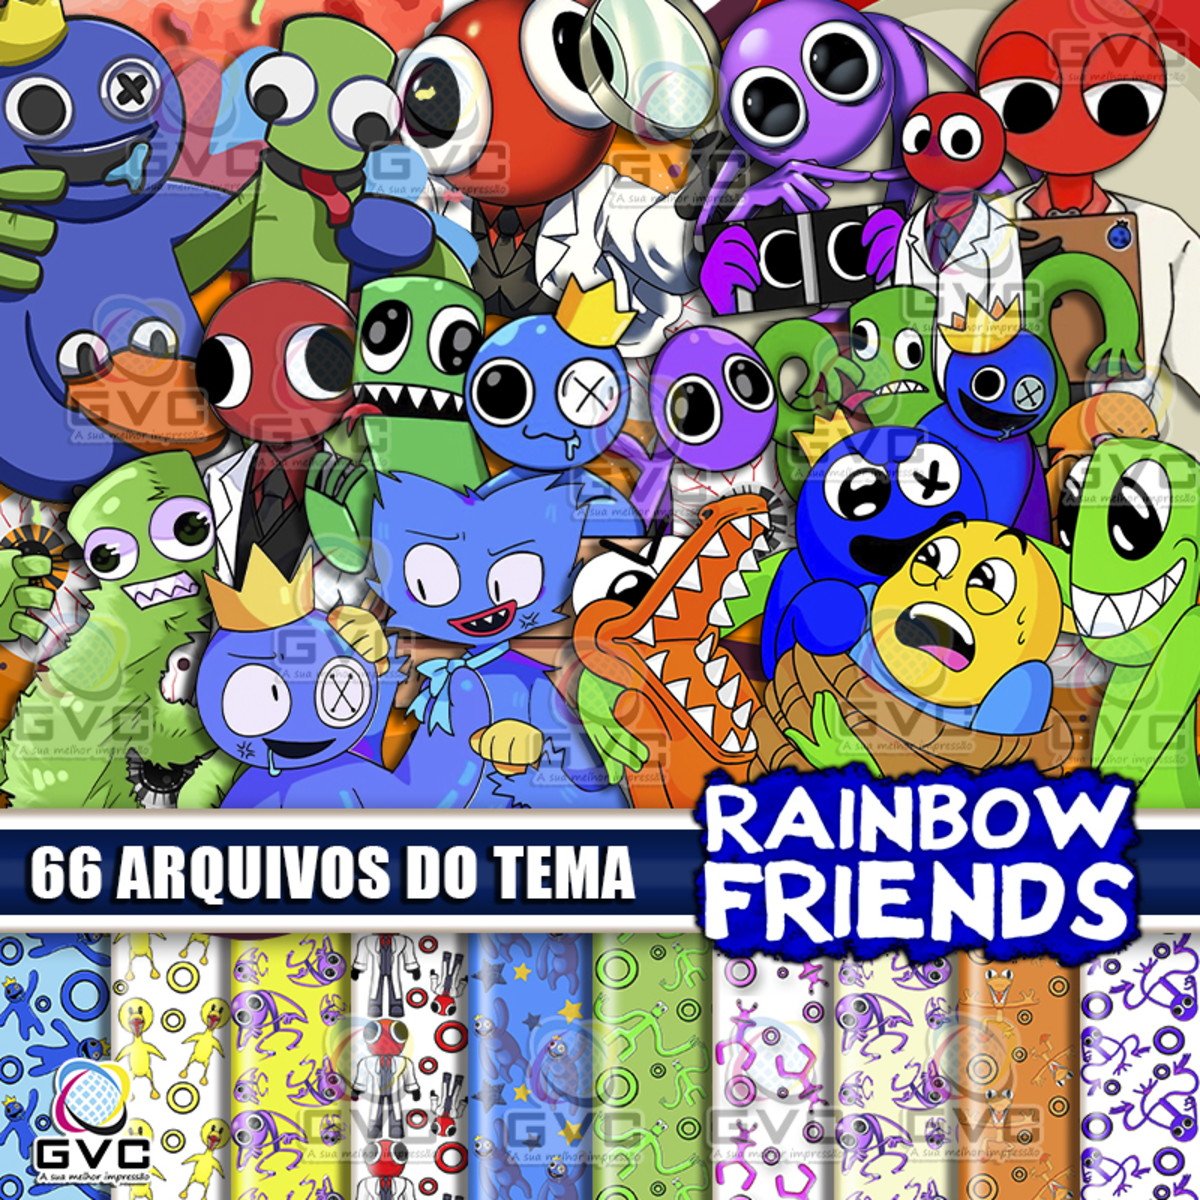 Arquivo de corte rainbow friends